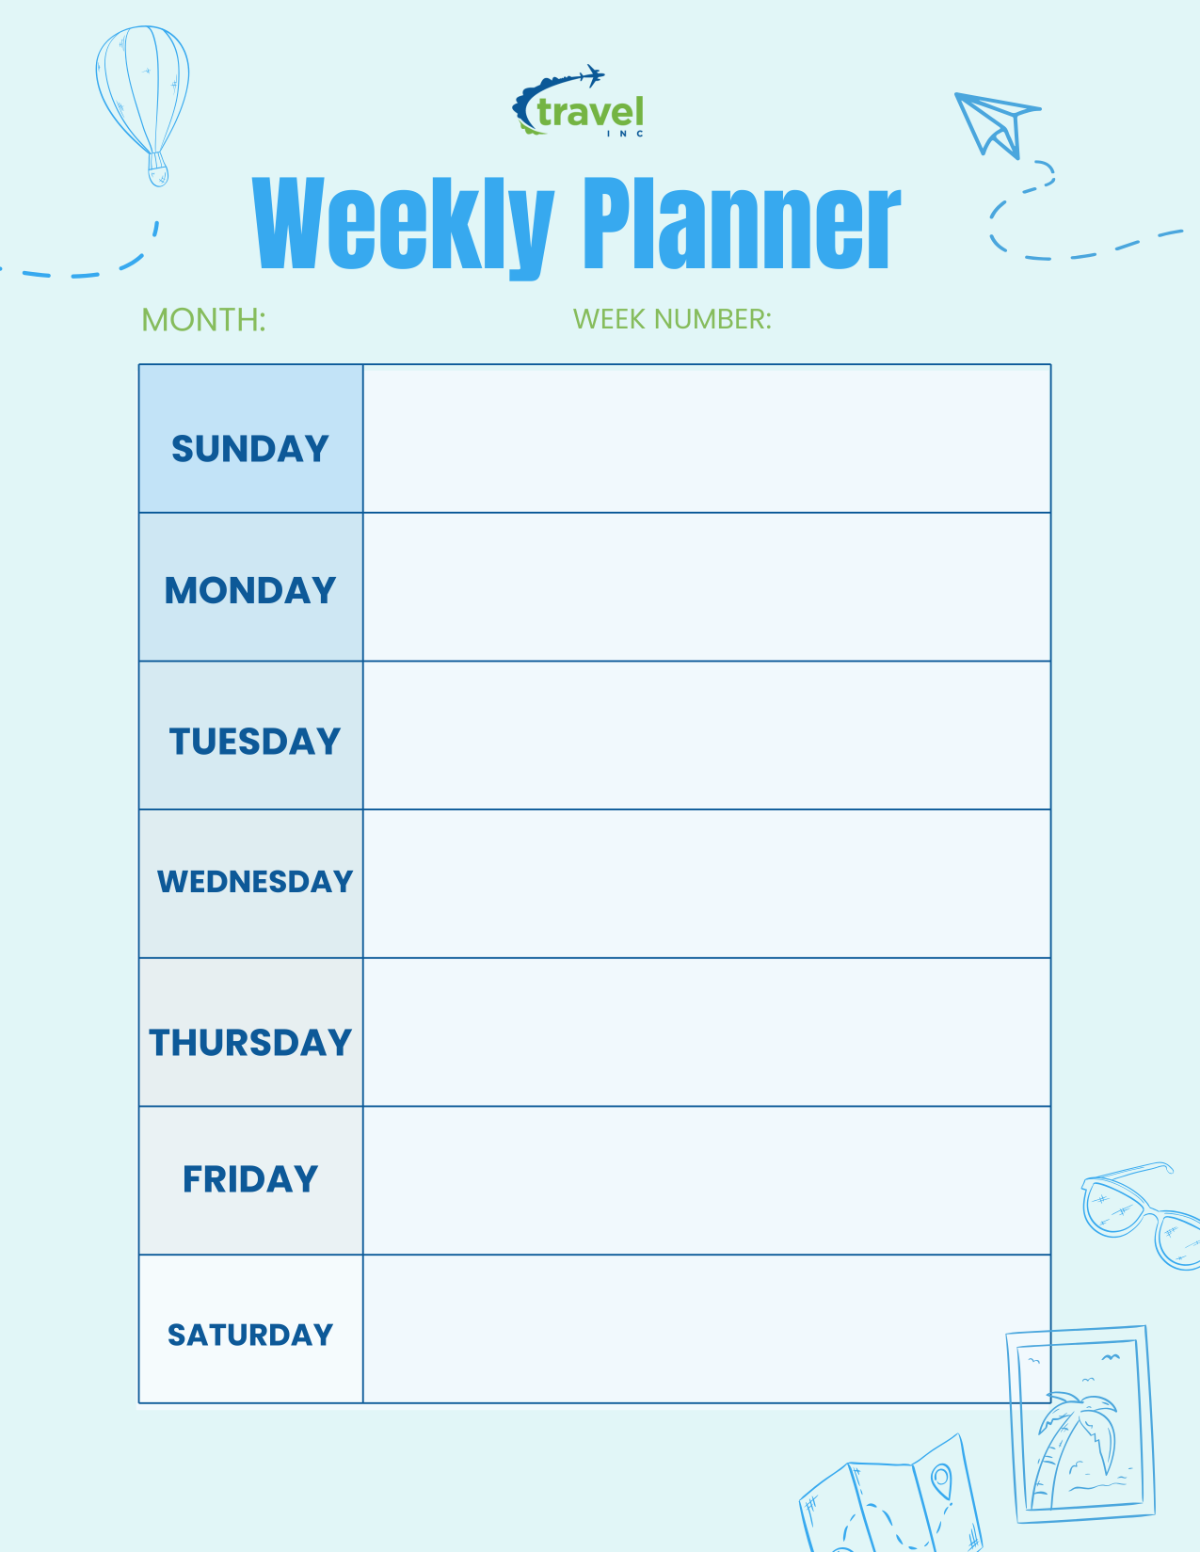 Travel Agency Weekly Planner